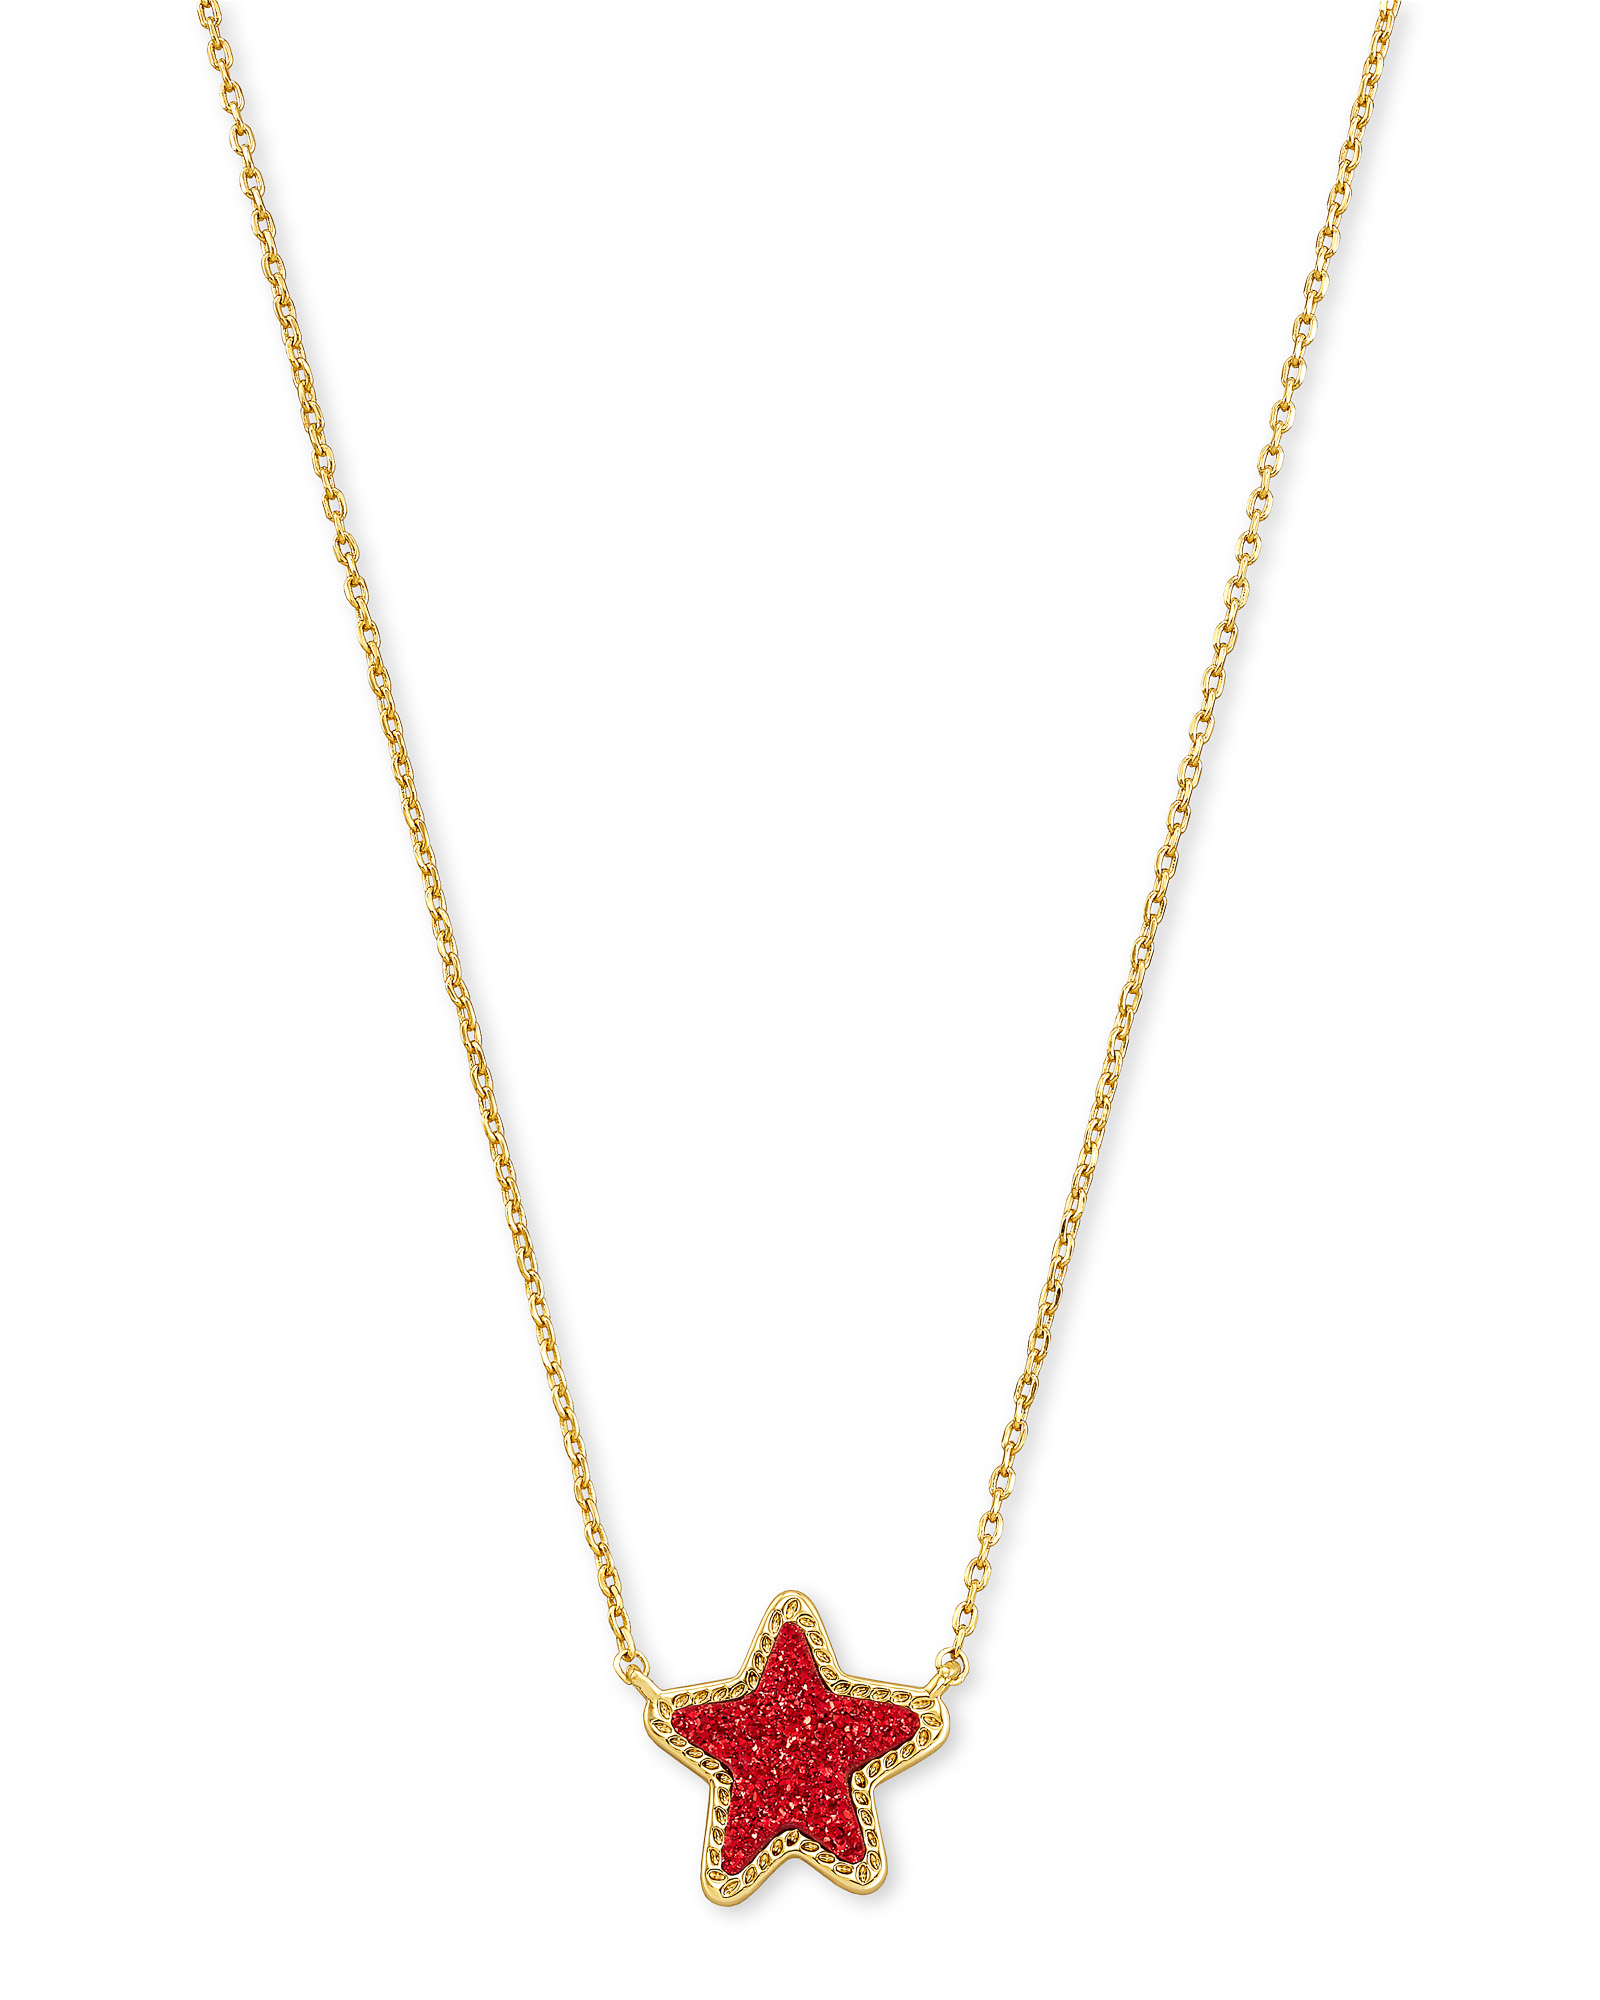 Davie 18k Gold Vermeil Pendant Necklace in Garnet | Kendra Scott